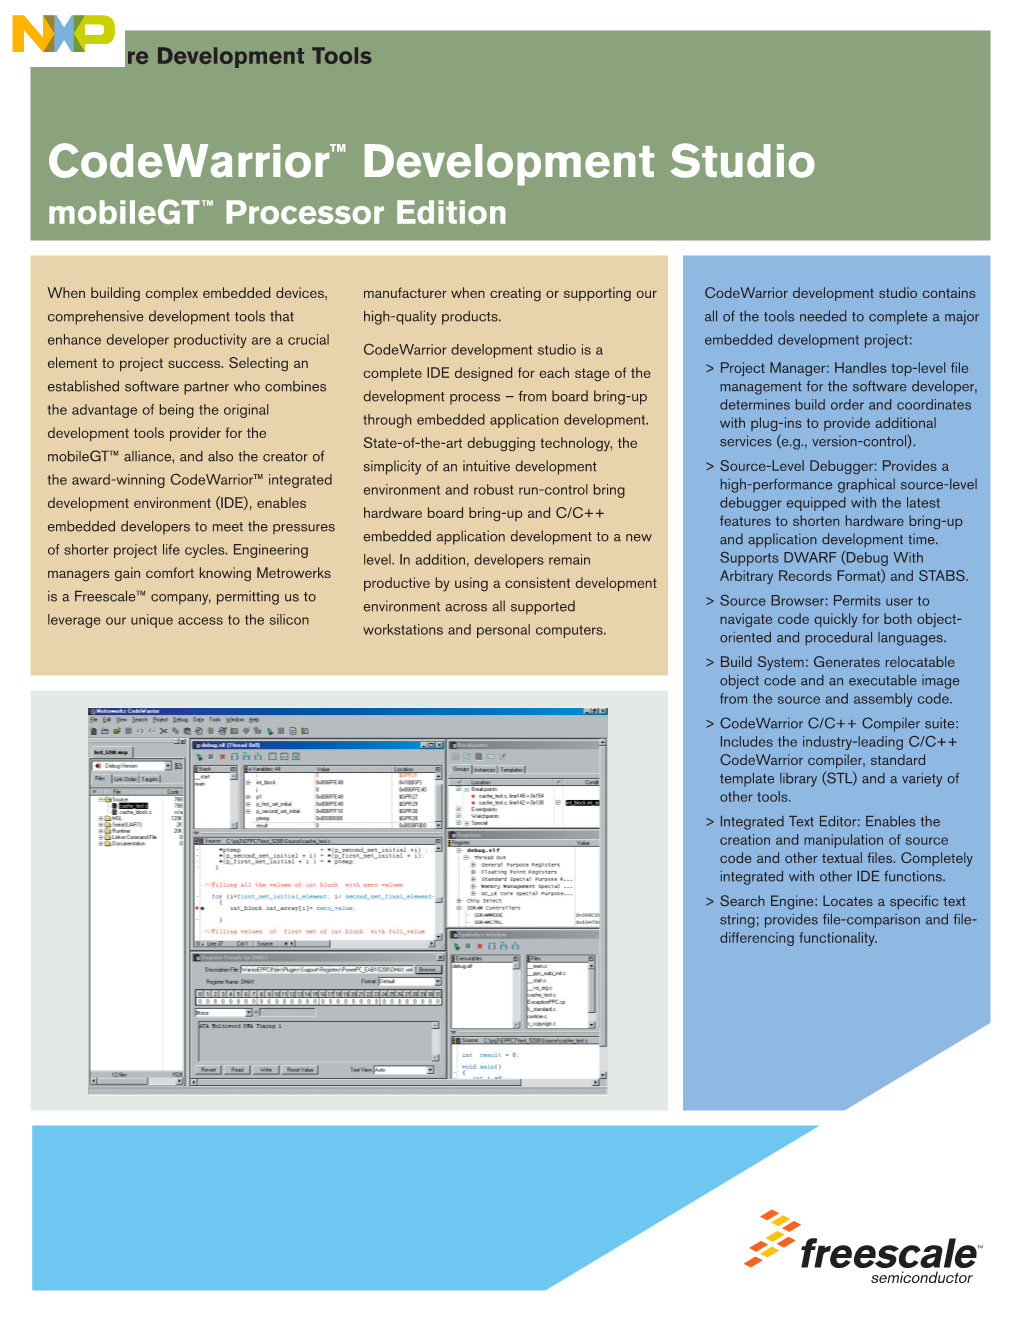 Codewarrior™ Development Studio Mobilegt™ Processor Edition